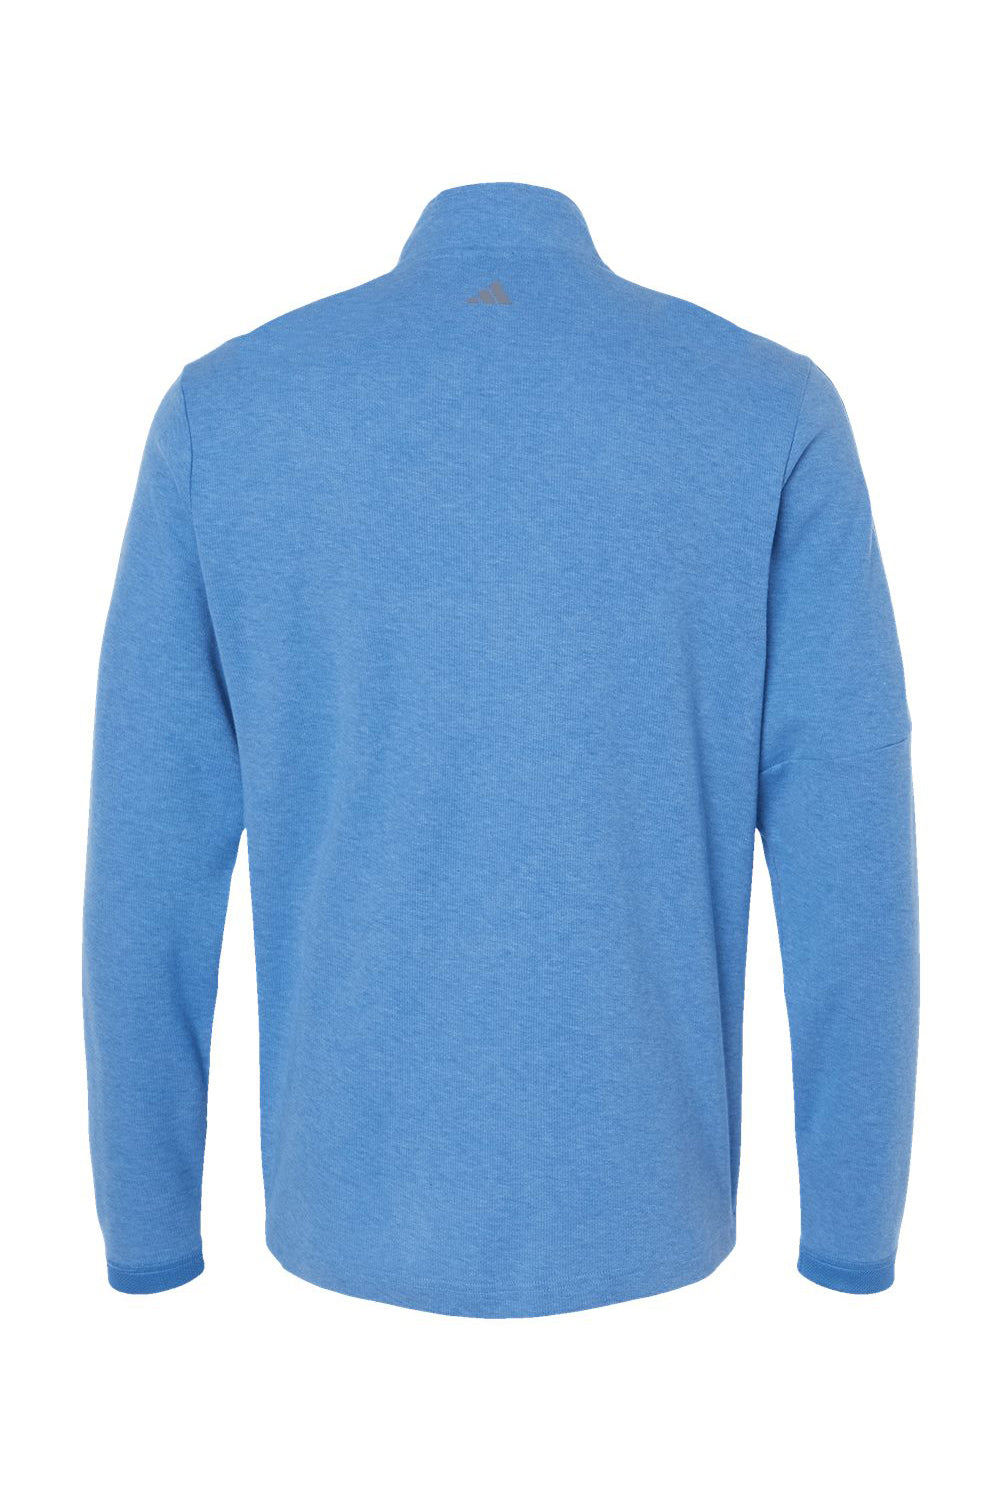 Adidas A554 Mens 3 Stripes 1/4 Zip Sweater Focus Blue Melange Flat Back